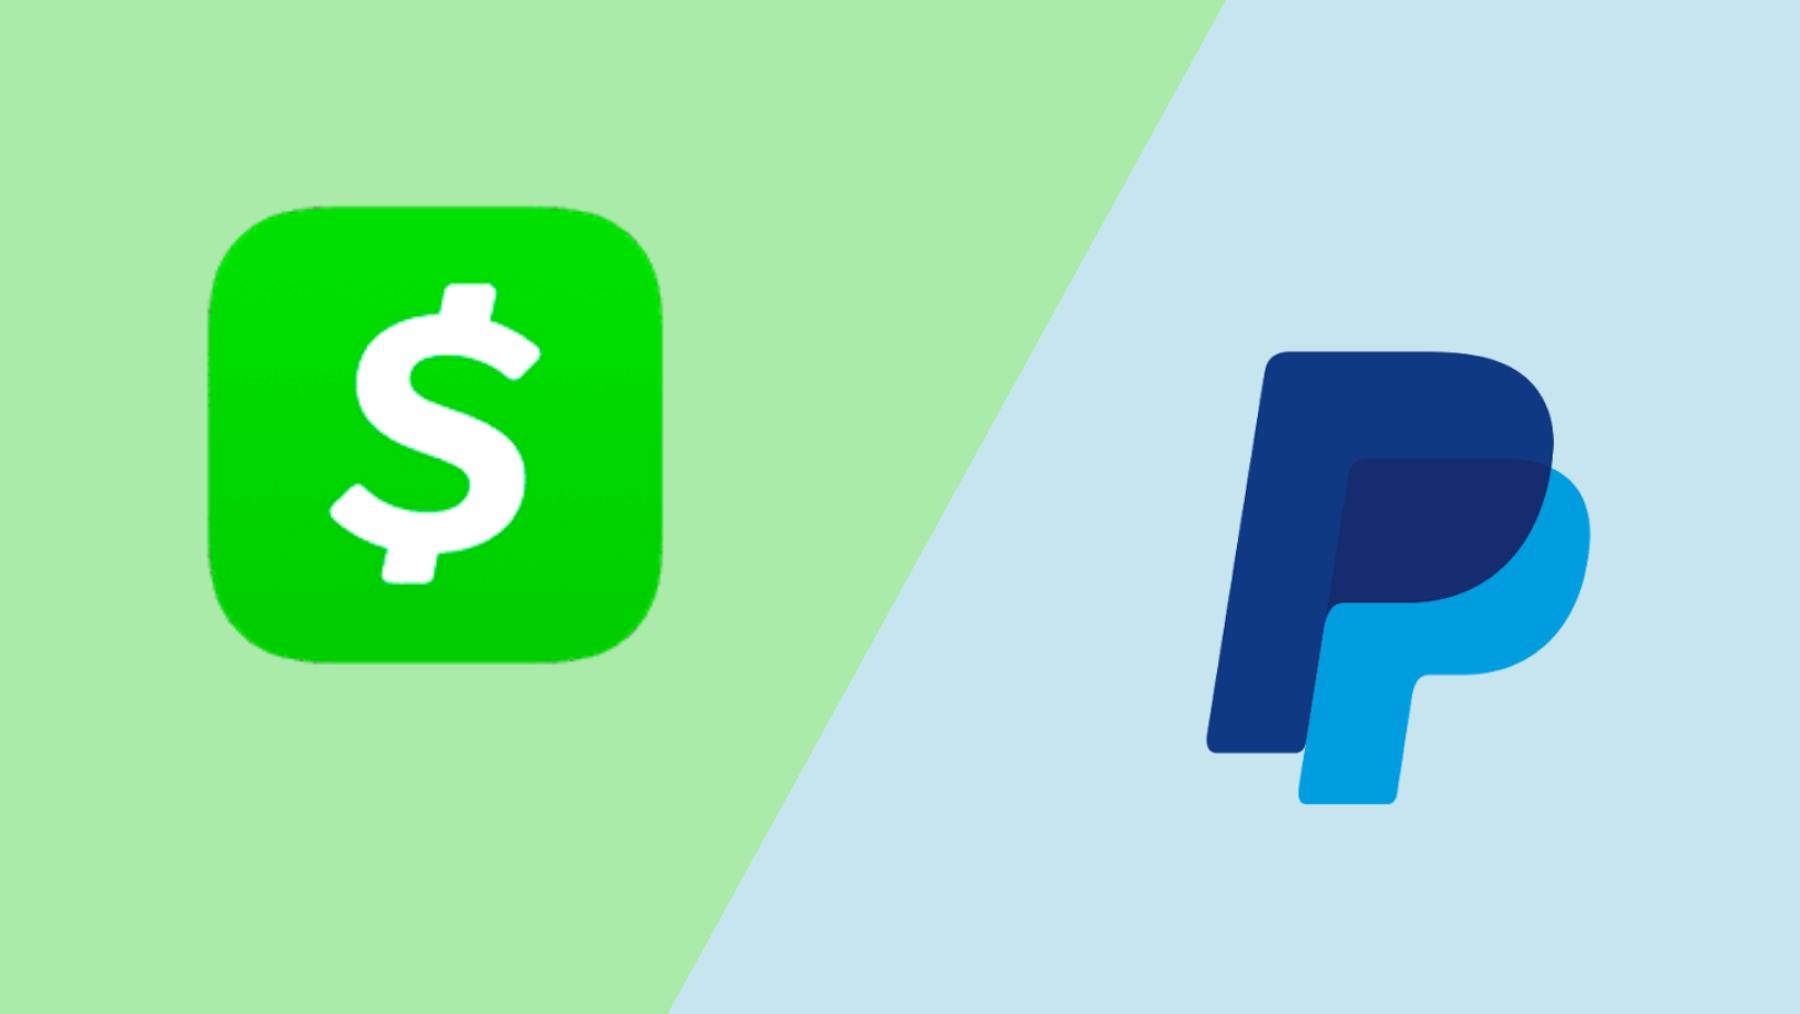 Is Cash App or PayPal safer?